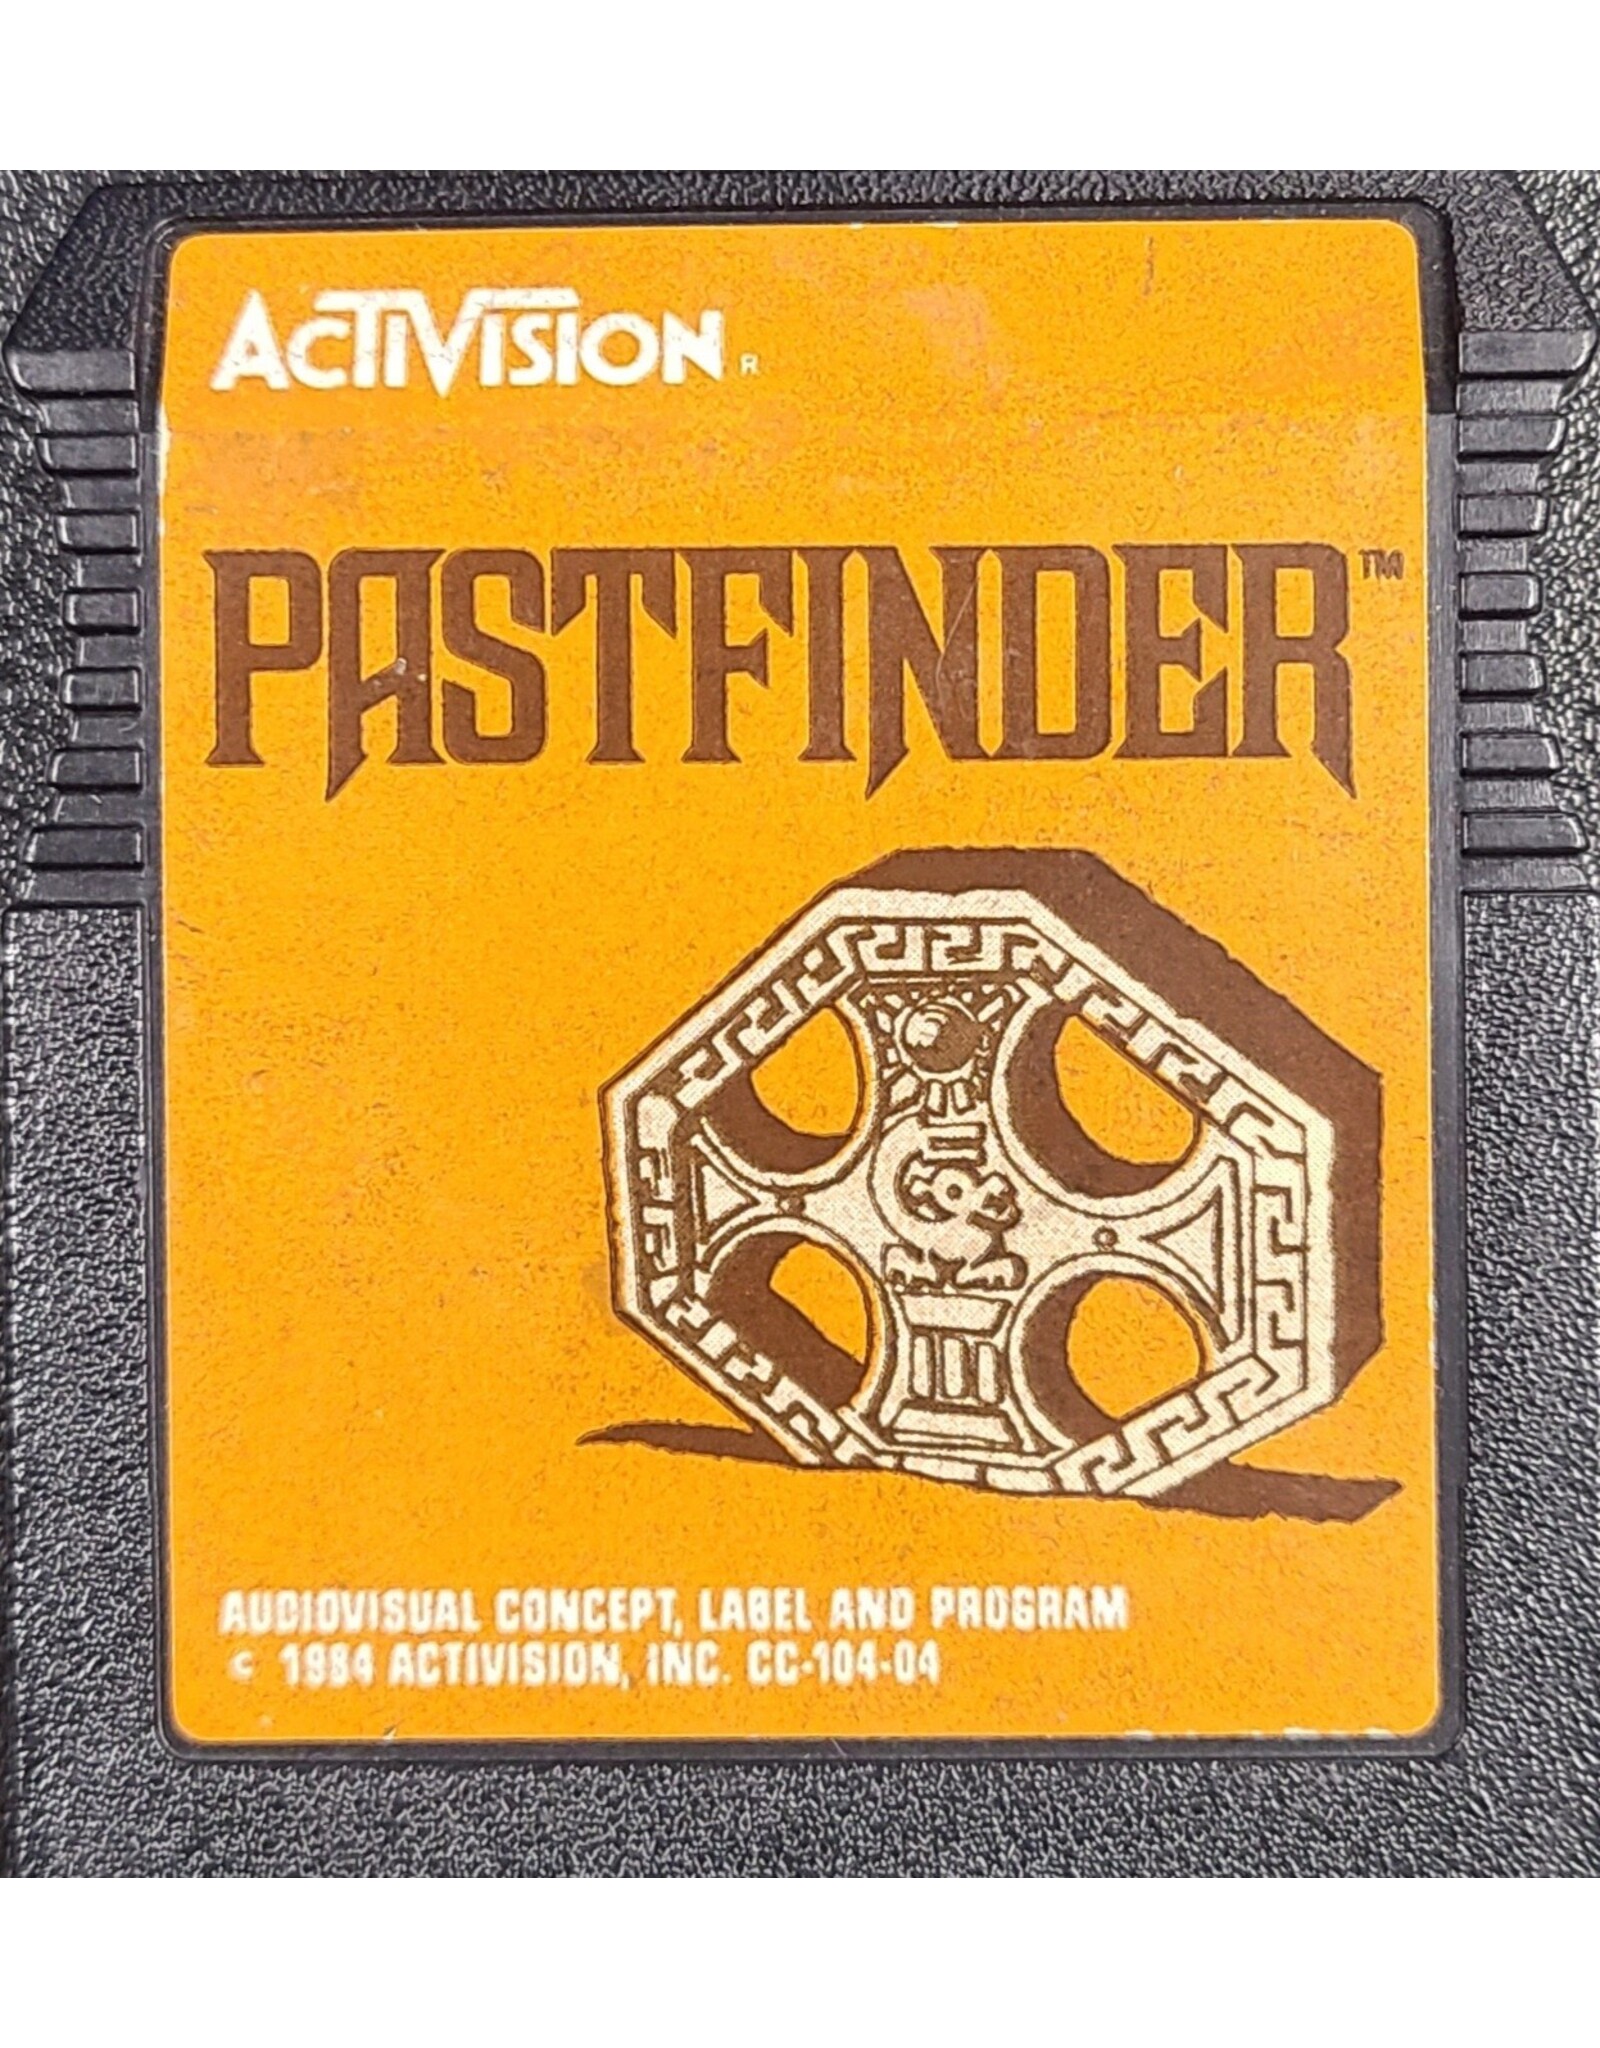 Atari 400 Pastfinder (Cart Only)